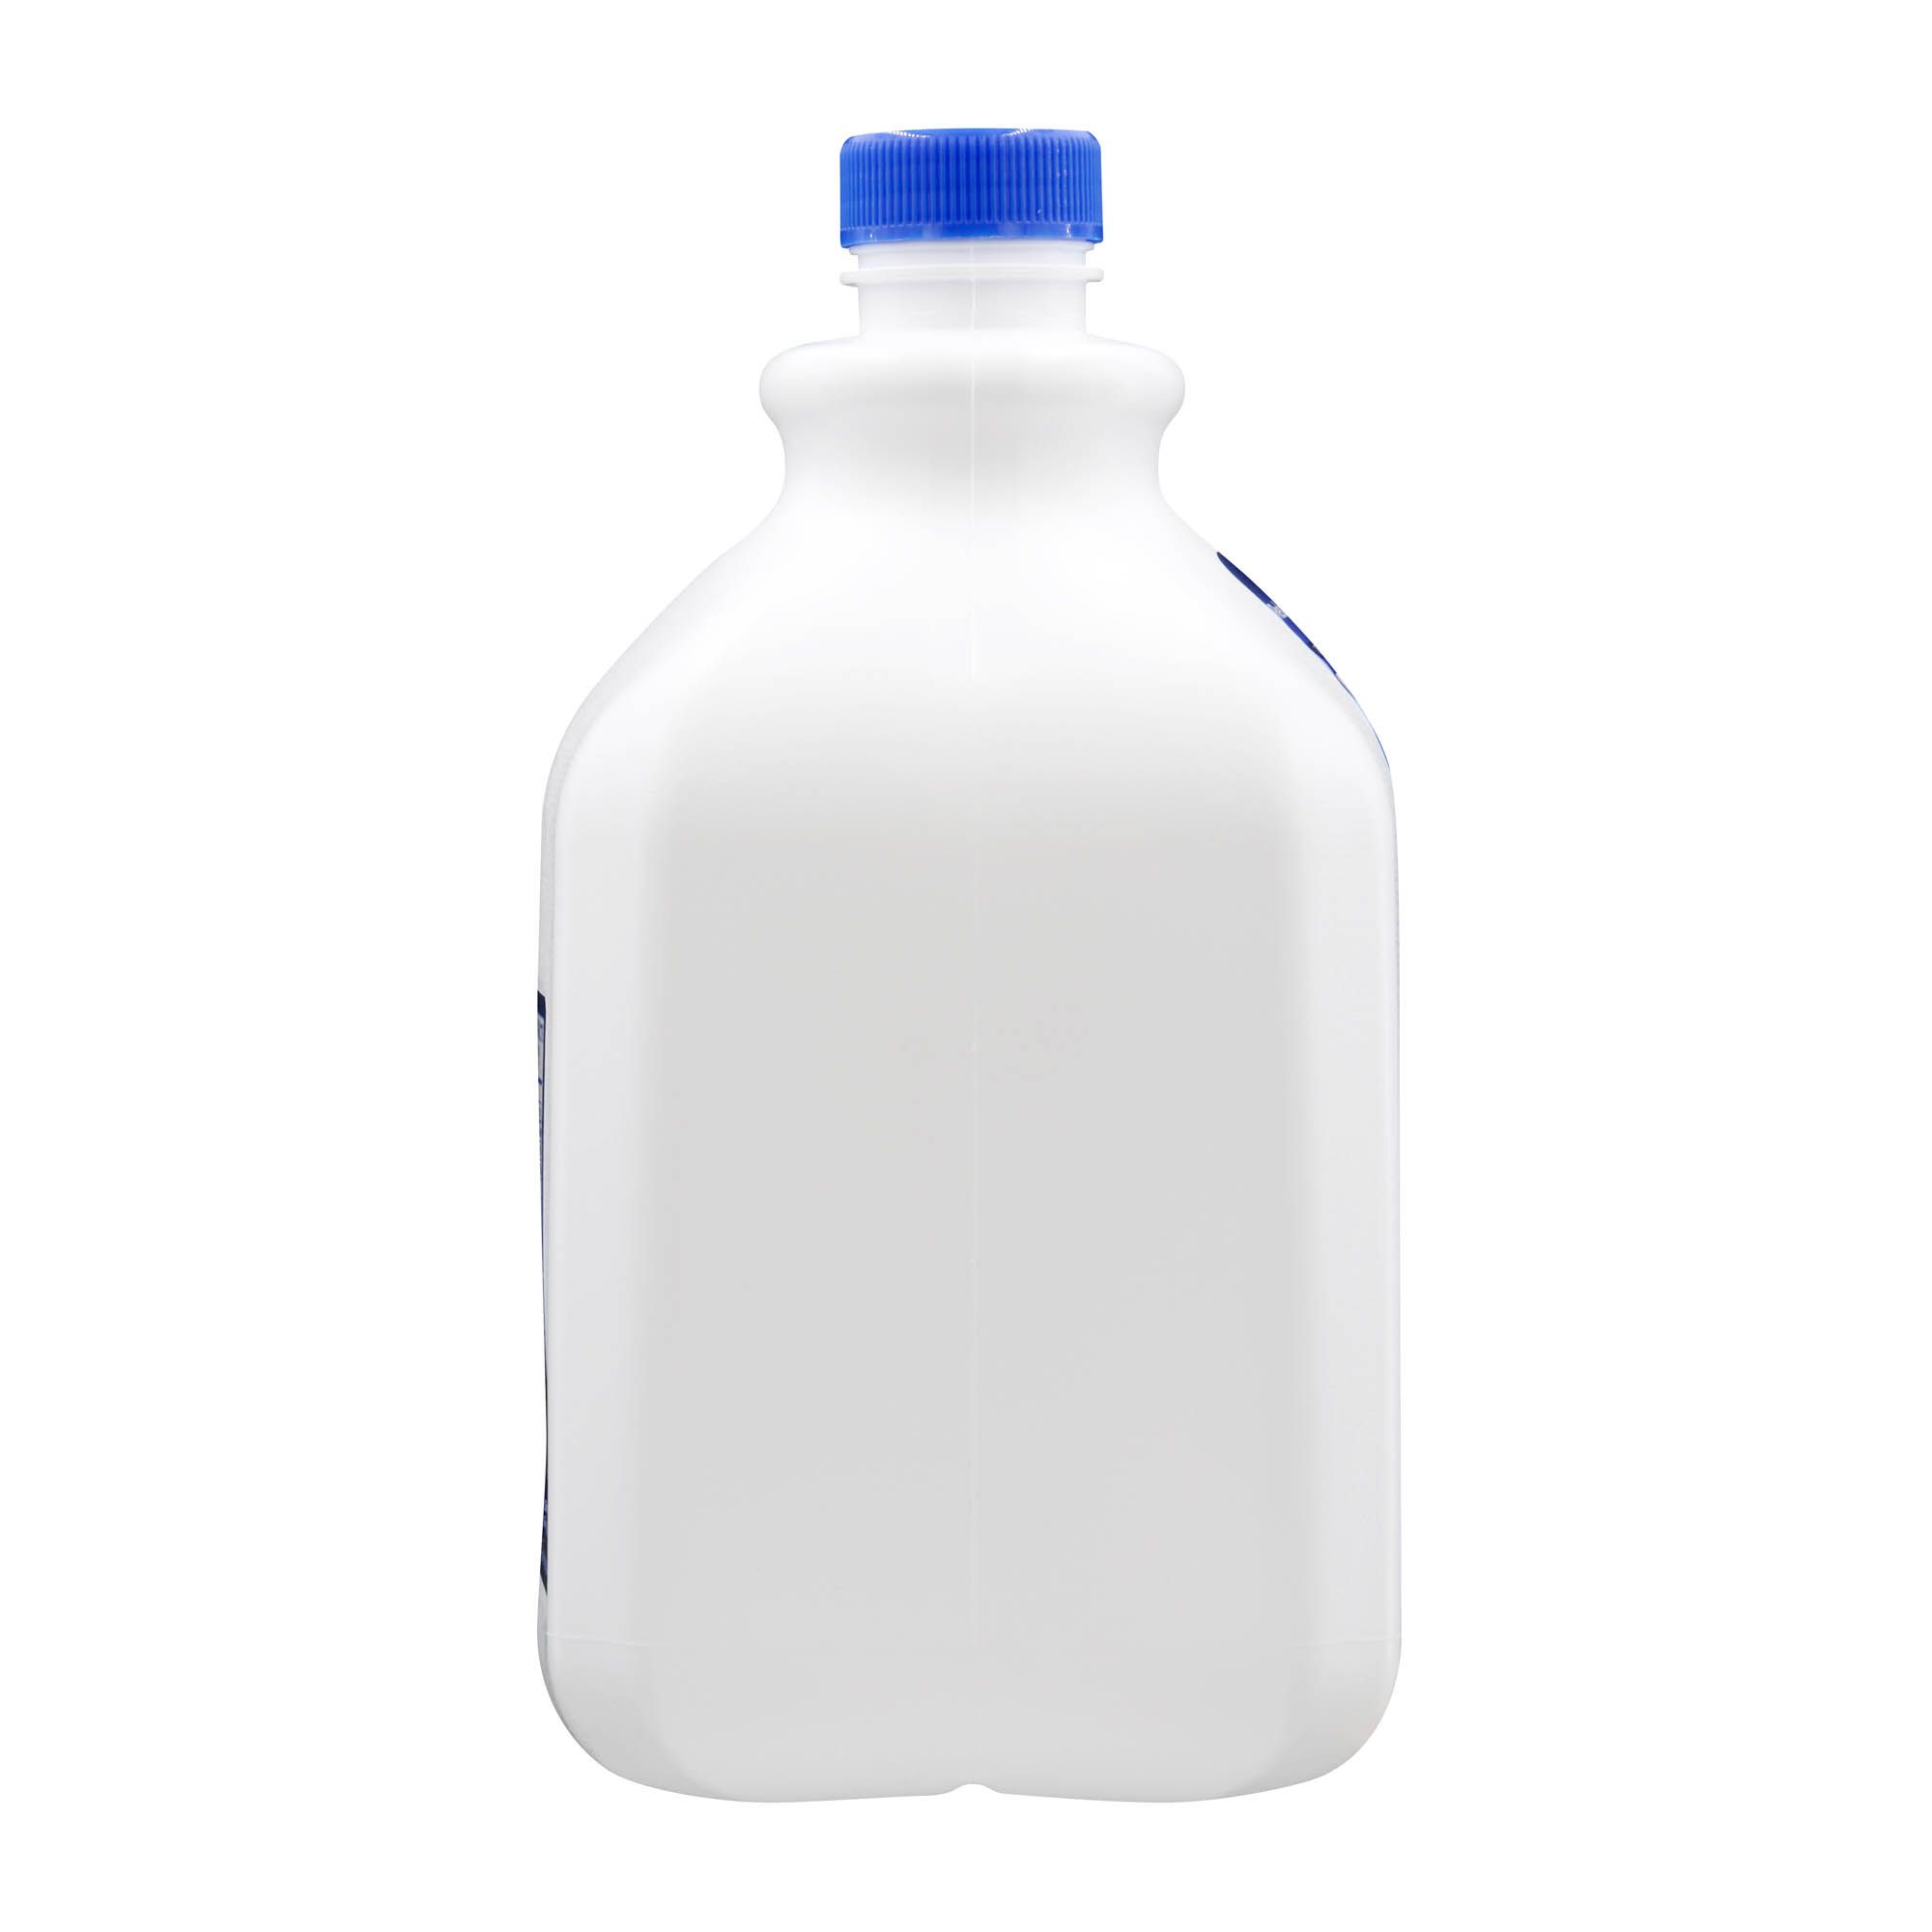 Lactaid 2% Reduced-Fat Lactose-Free Milk, 96 oz.